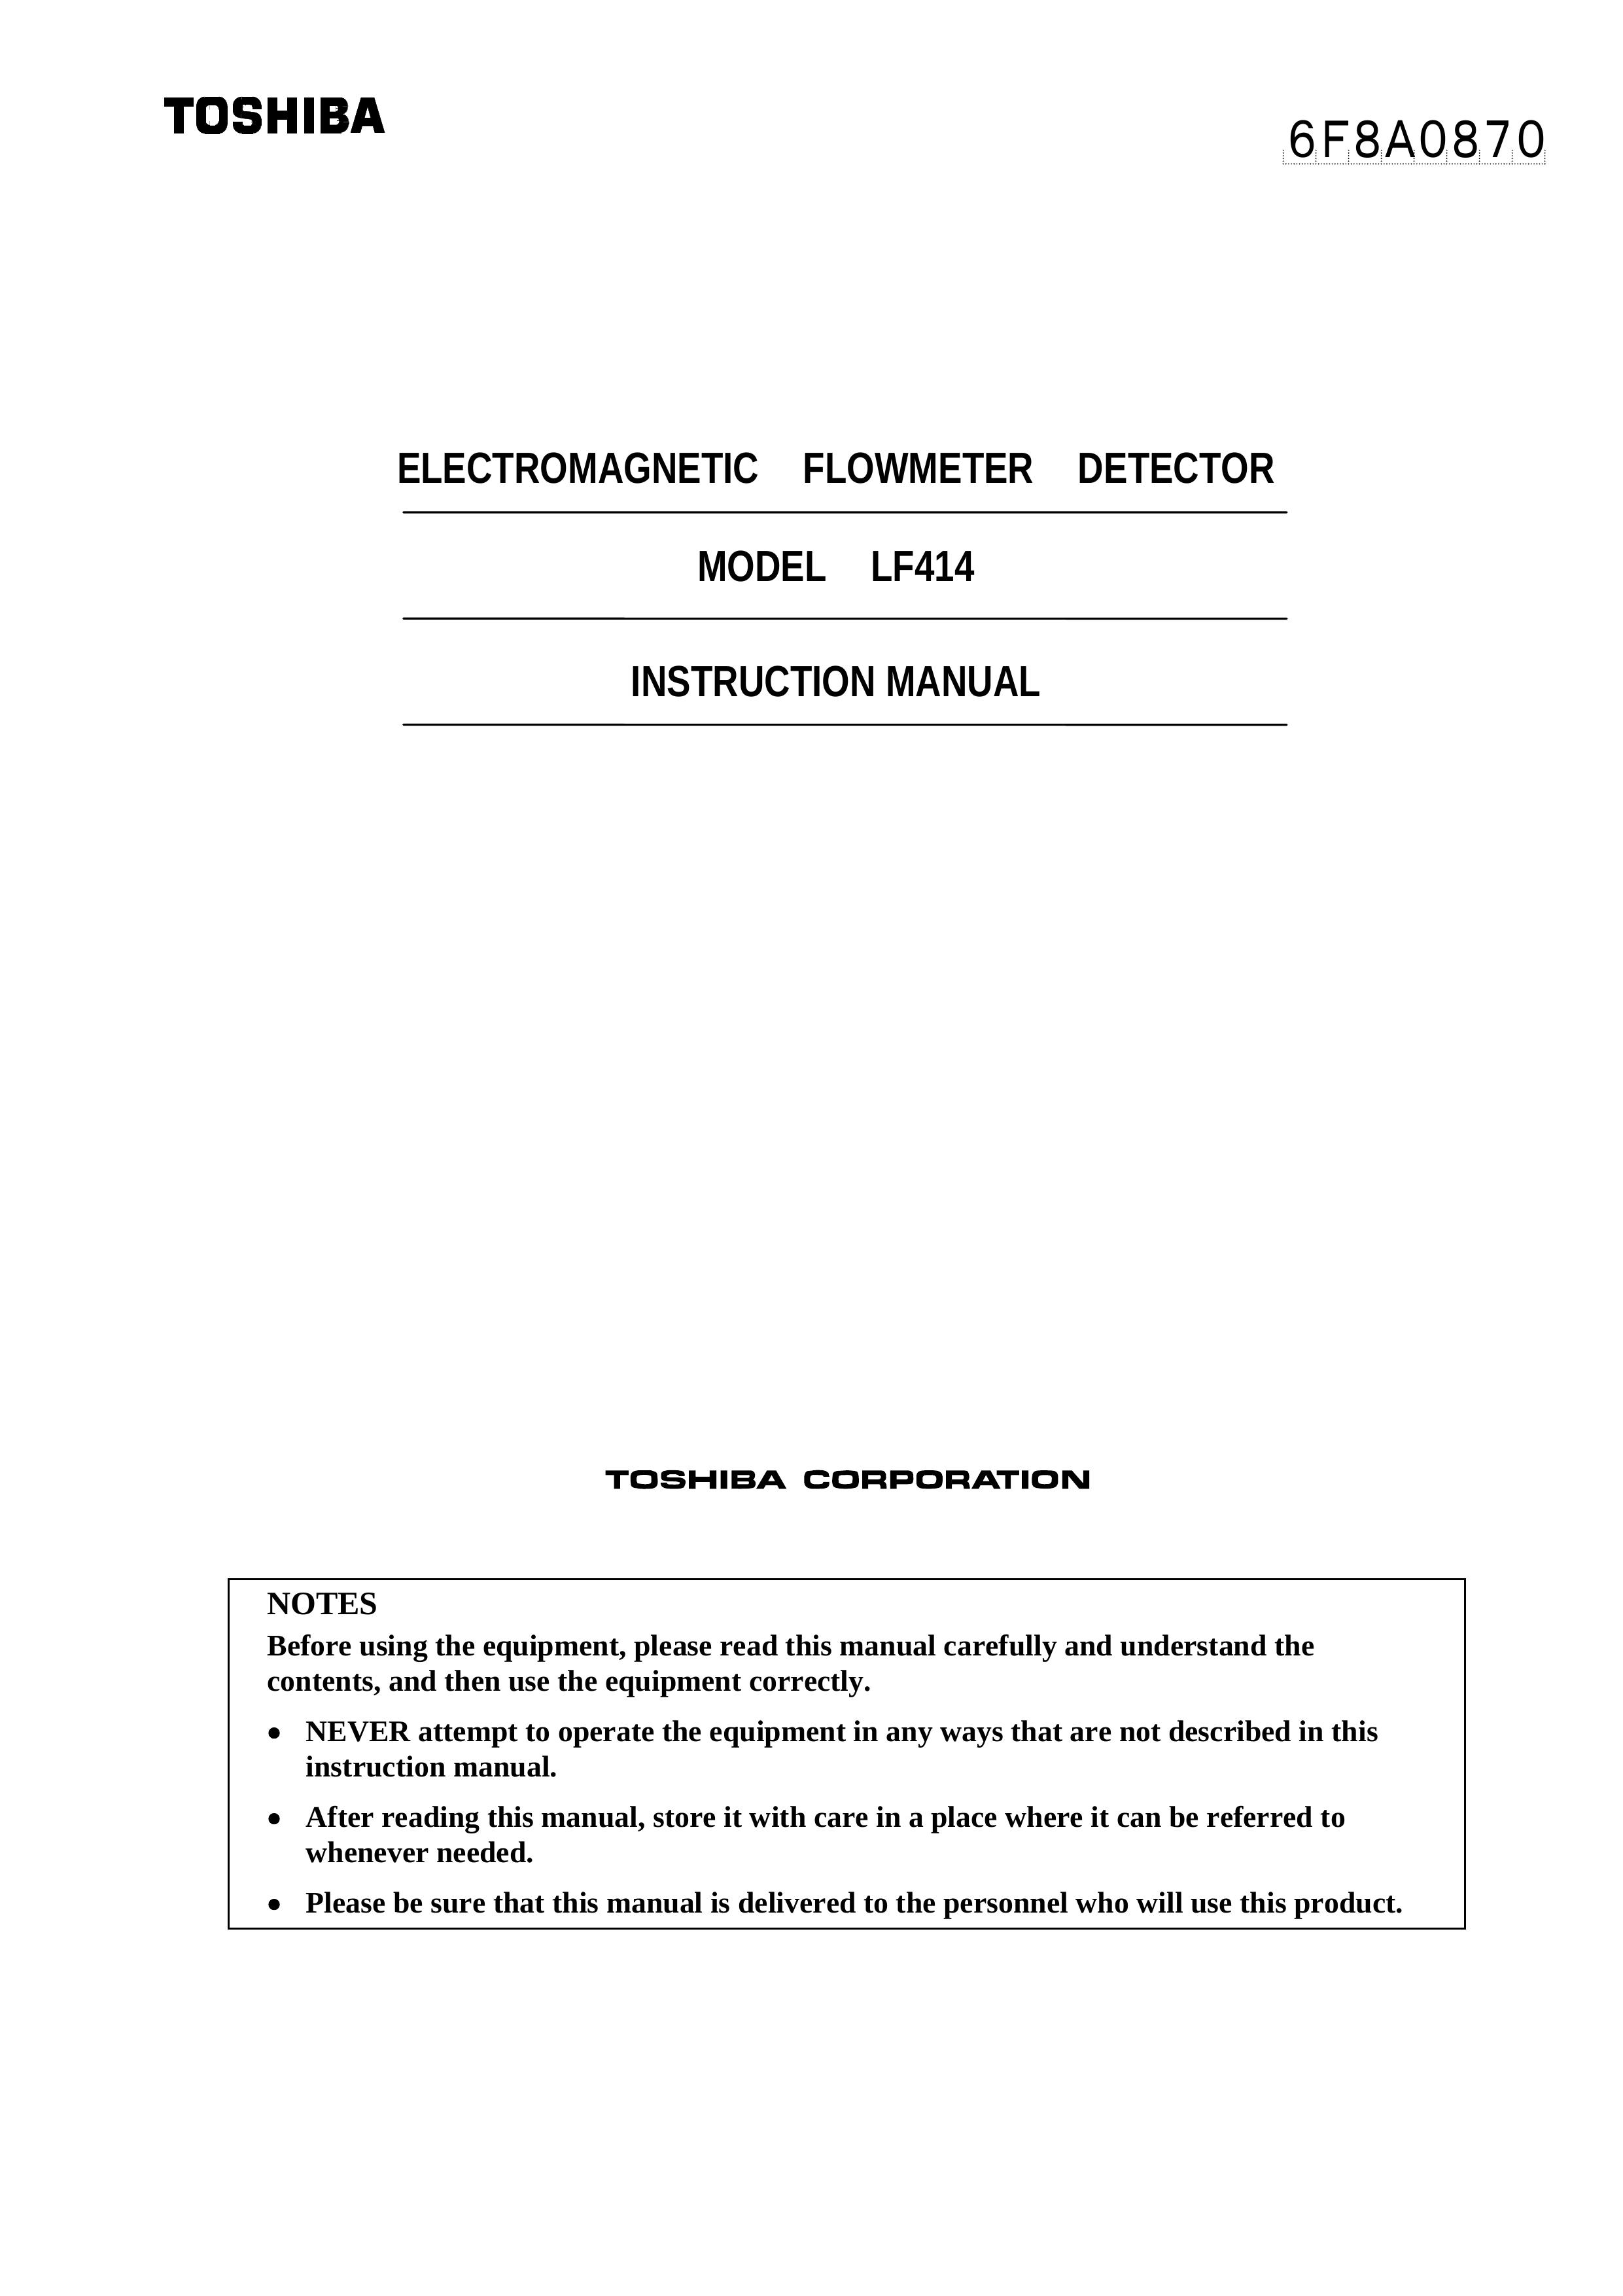 Toshiba LF414 Metal Detector User Manual